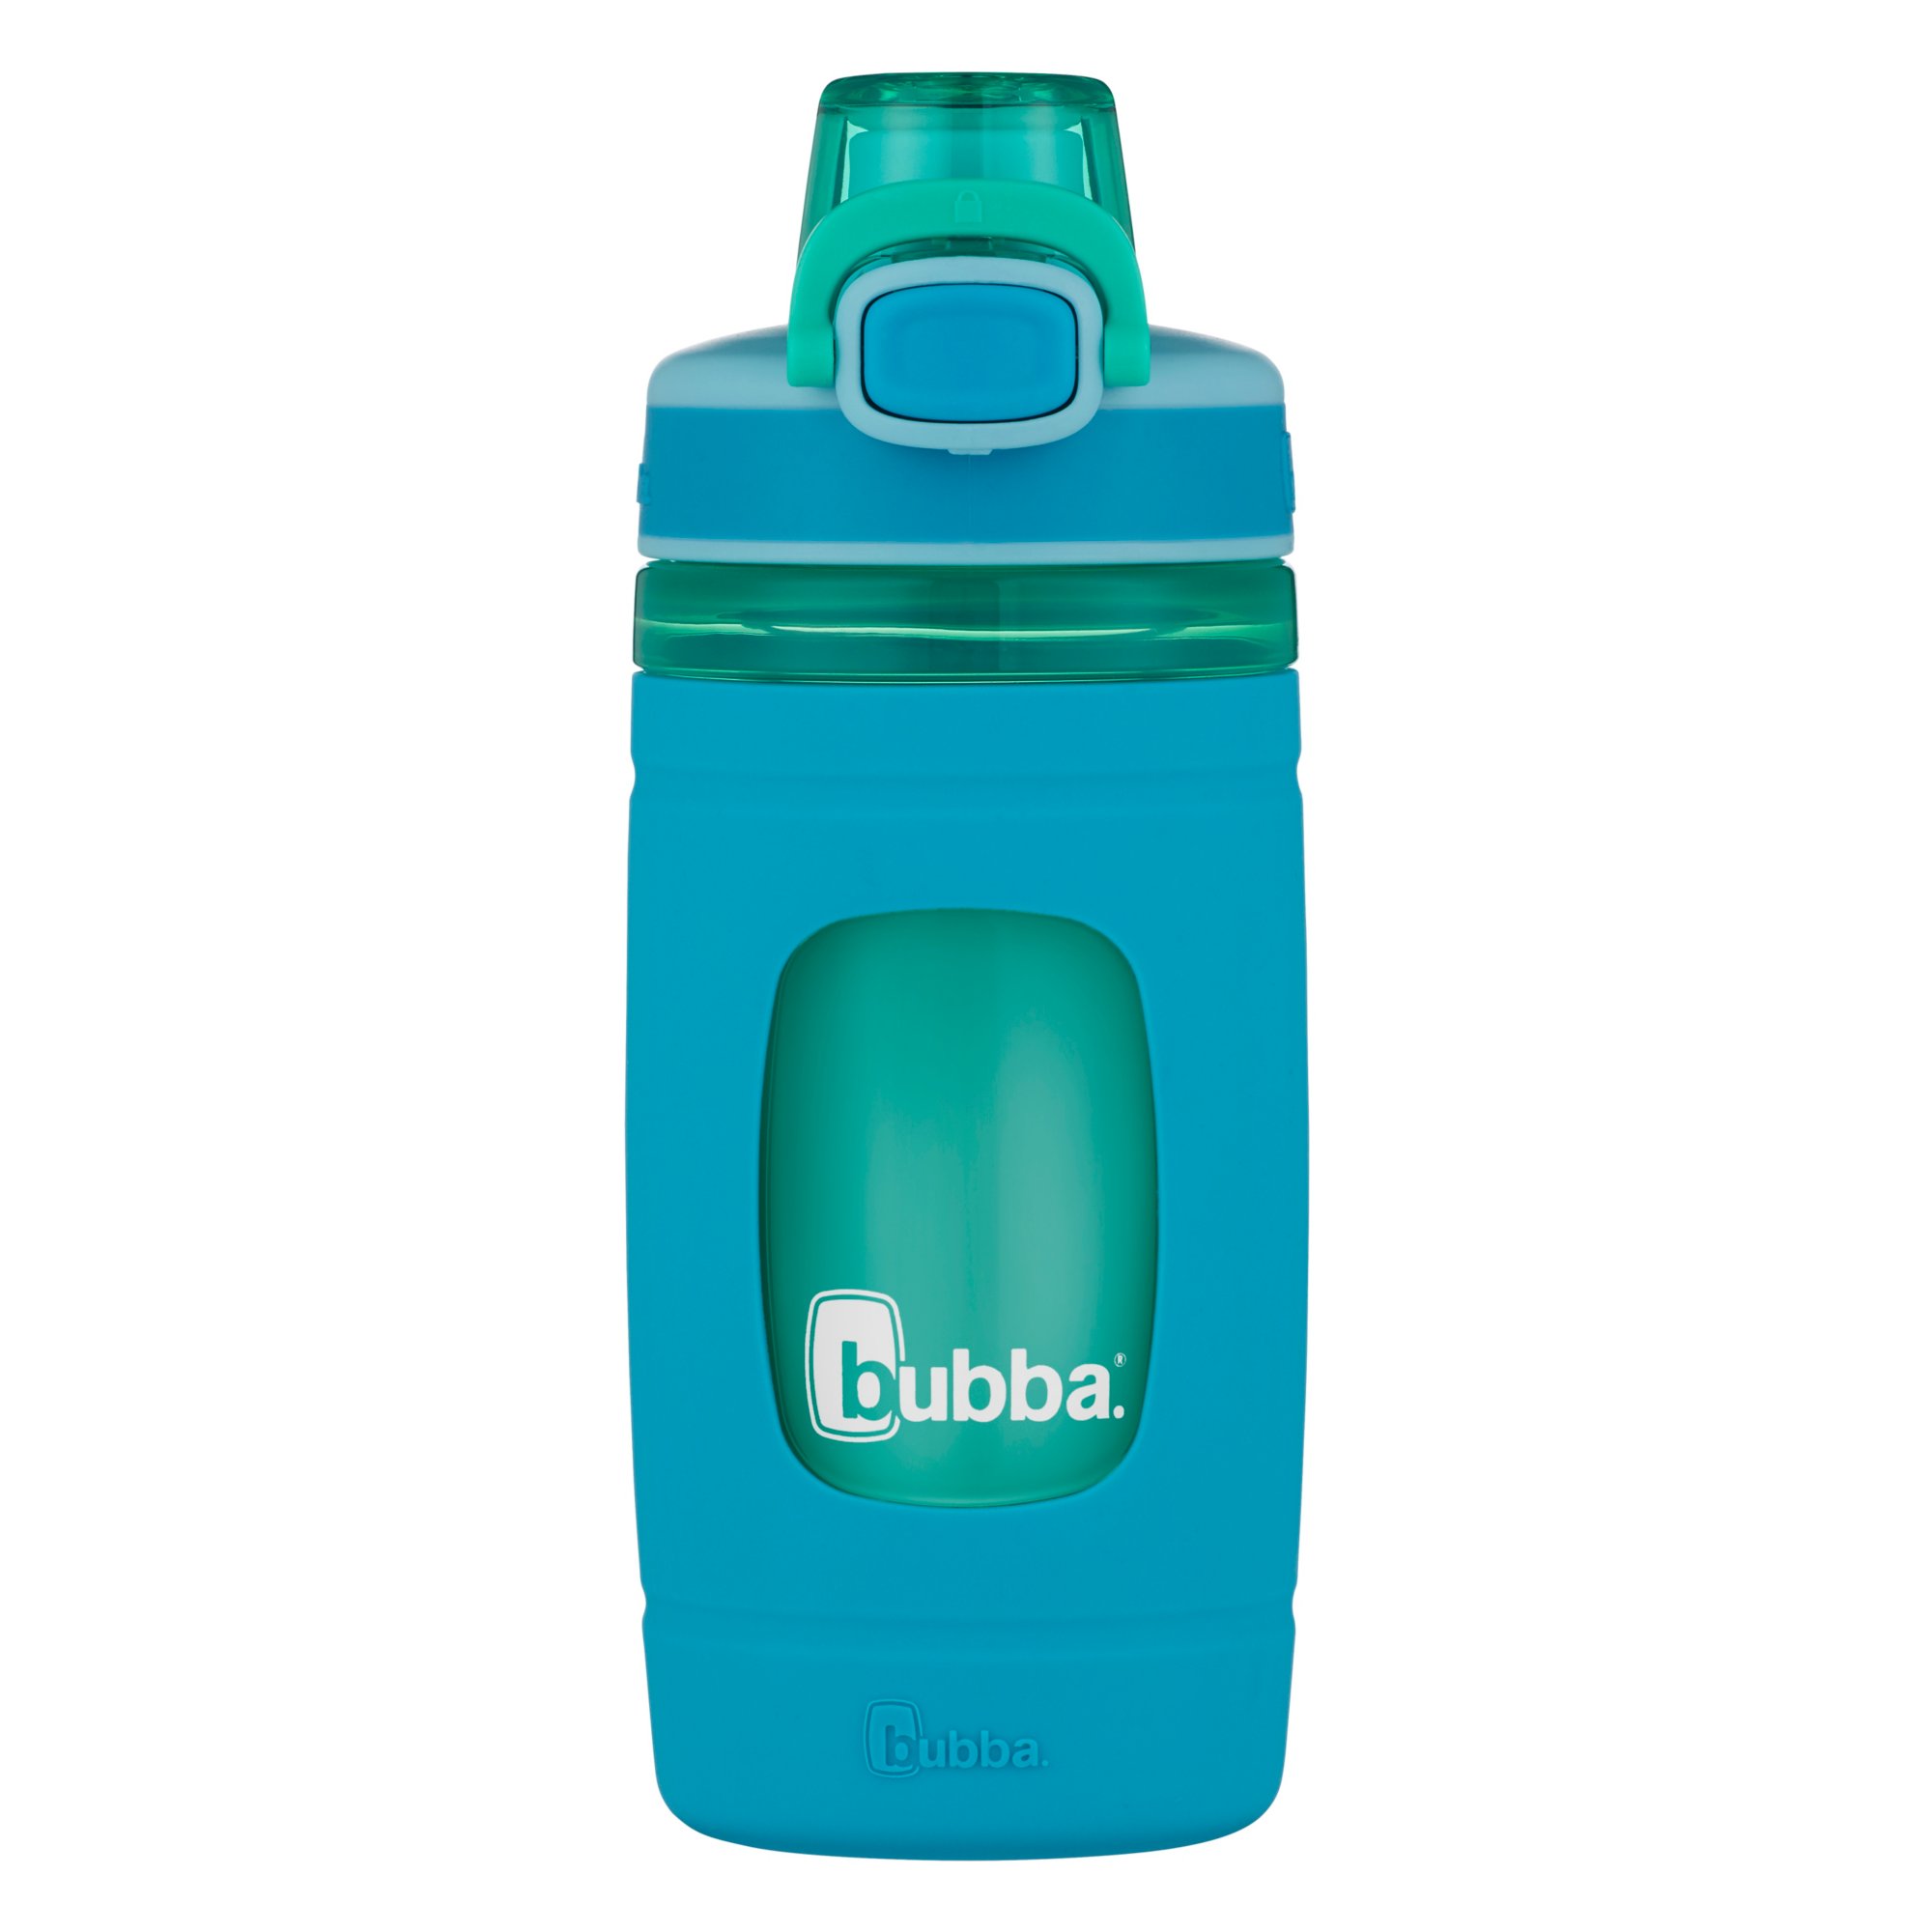 bubba Flo Kids Water Bottle with Silicone Sleeve, 16 oz., Tutti